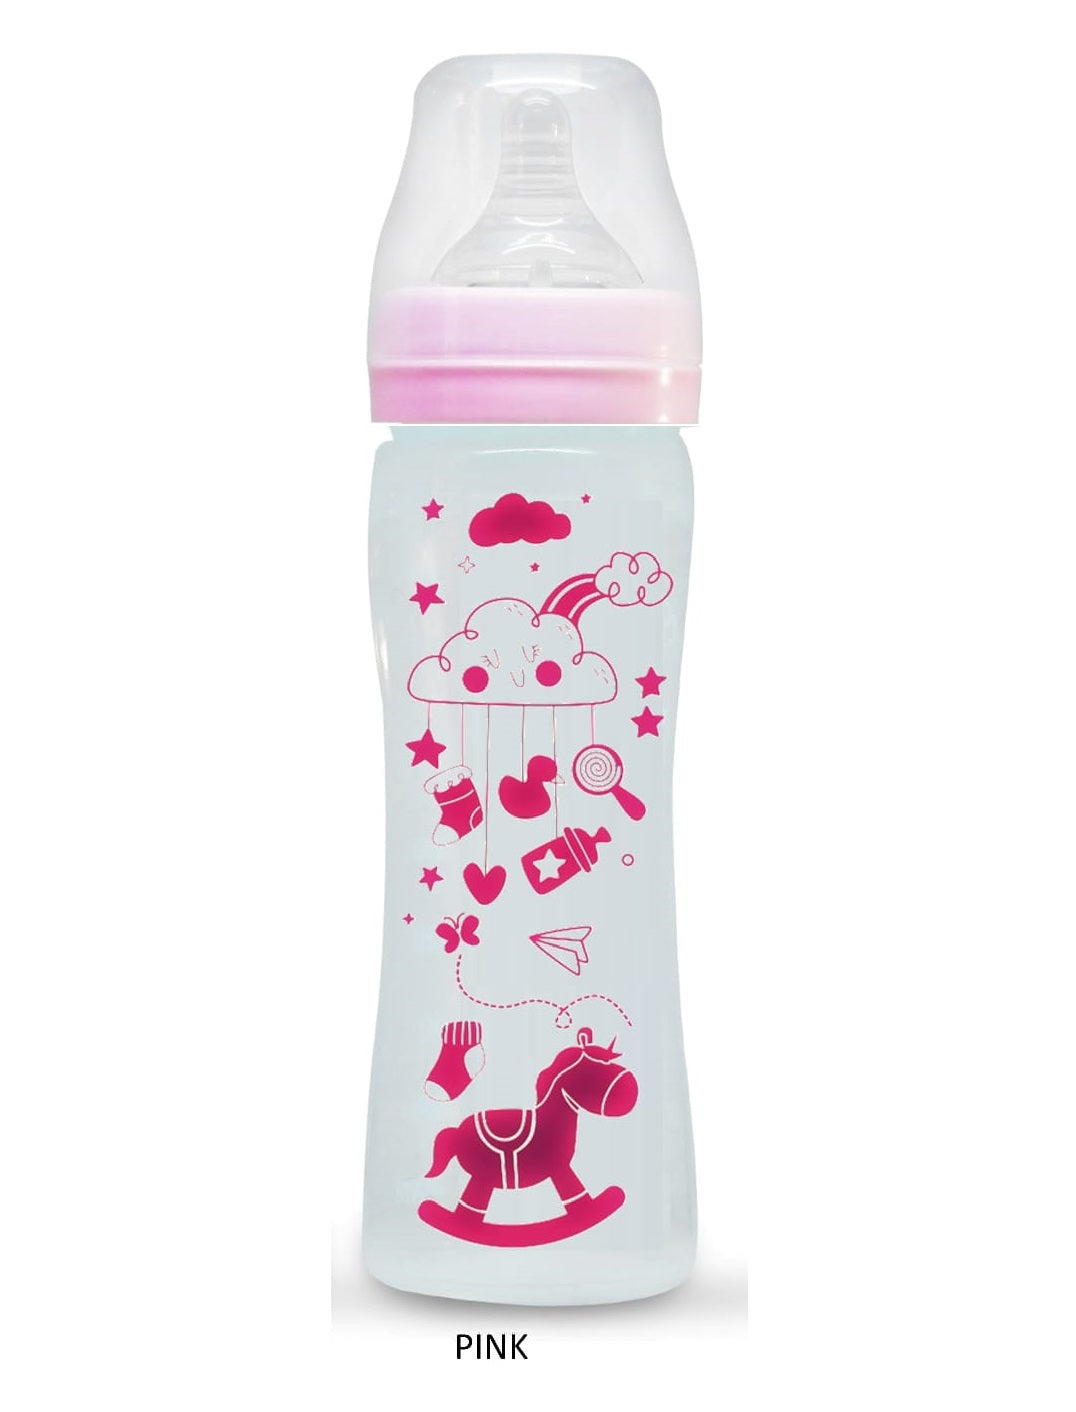 Cadle Baby Anti-Colic Slim-Regular Neck Milk Feeding Bottle with BPA-Free Nipple -240ml(blue)